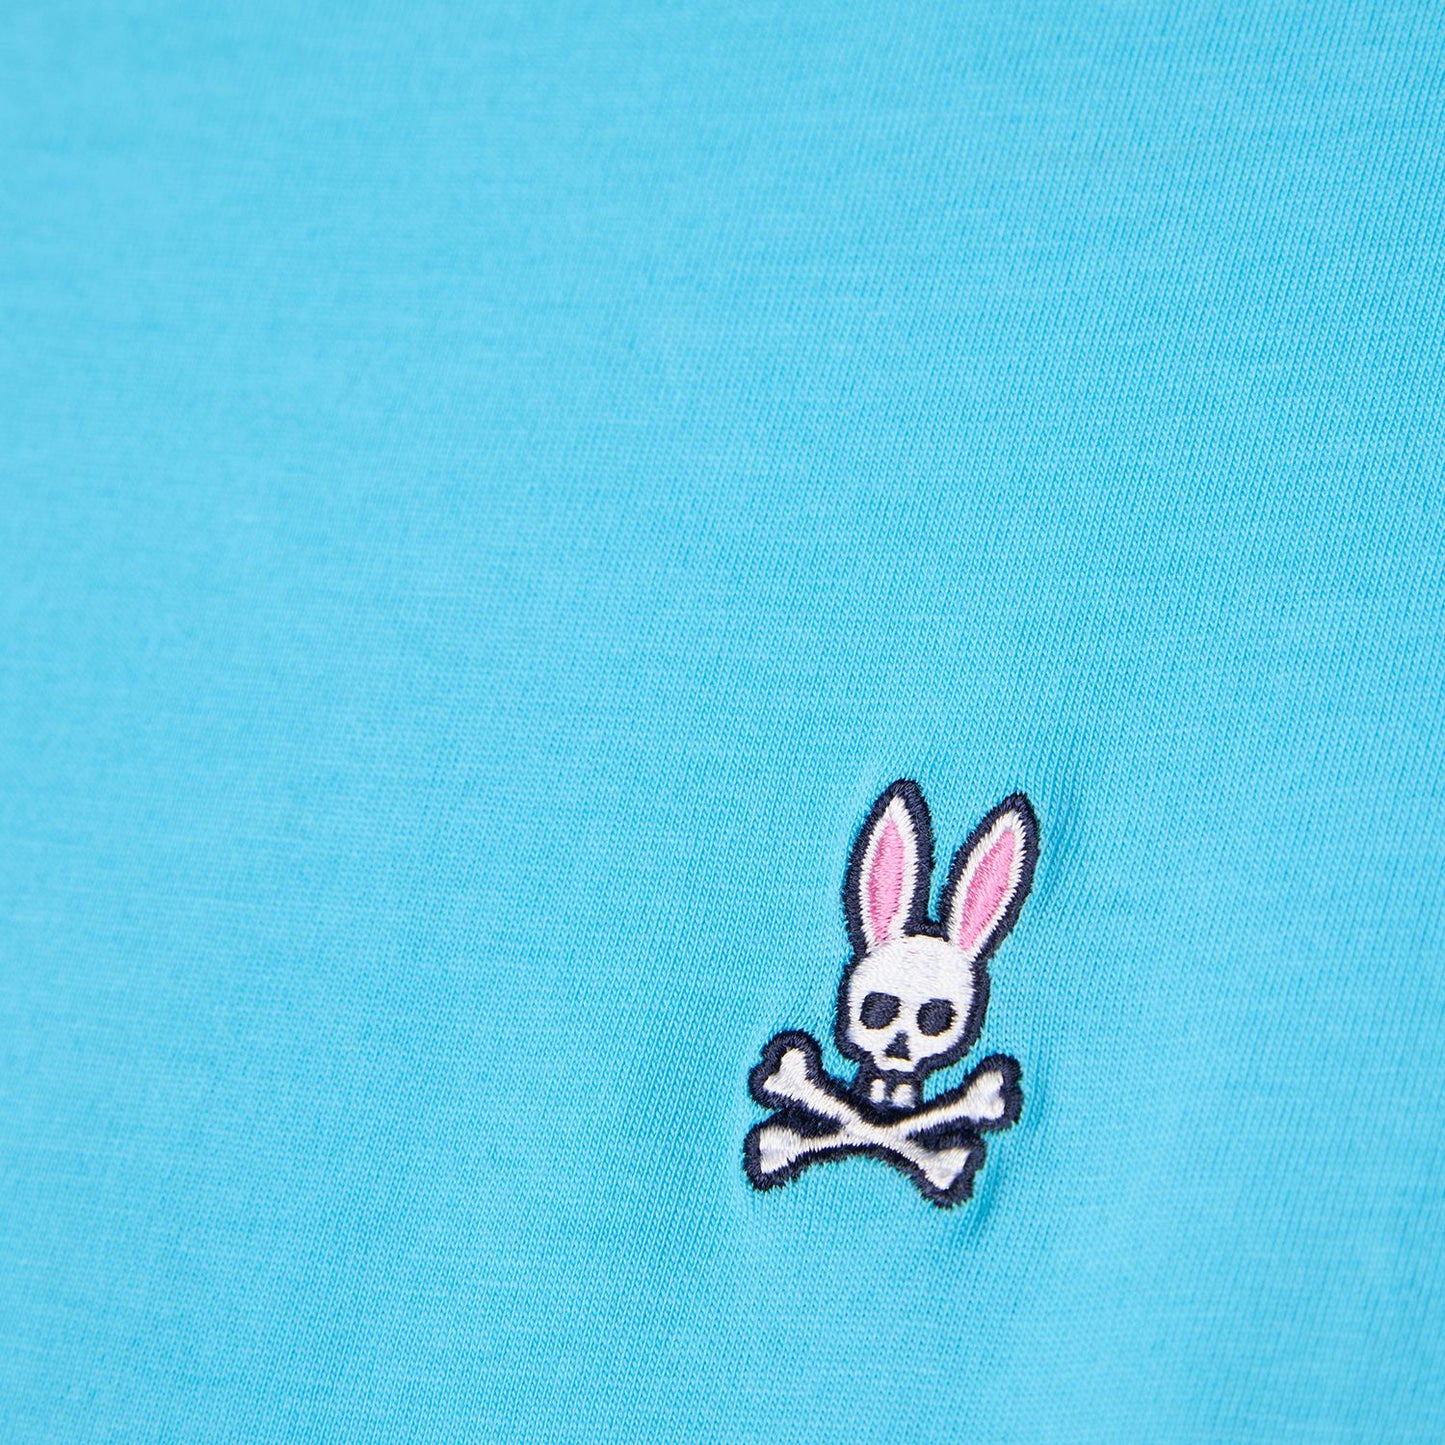 Psycho Bunny Kids Classic Crew Neck T-Shirt_  B0U014B200-450